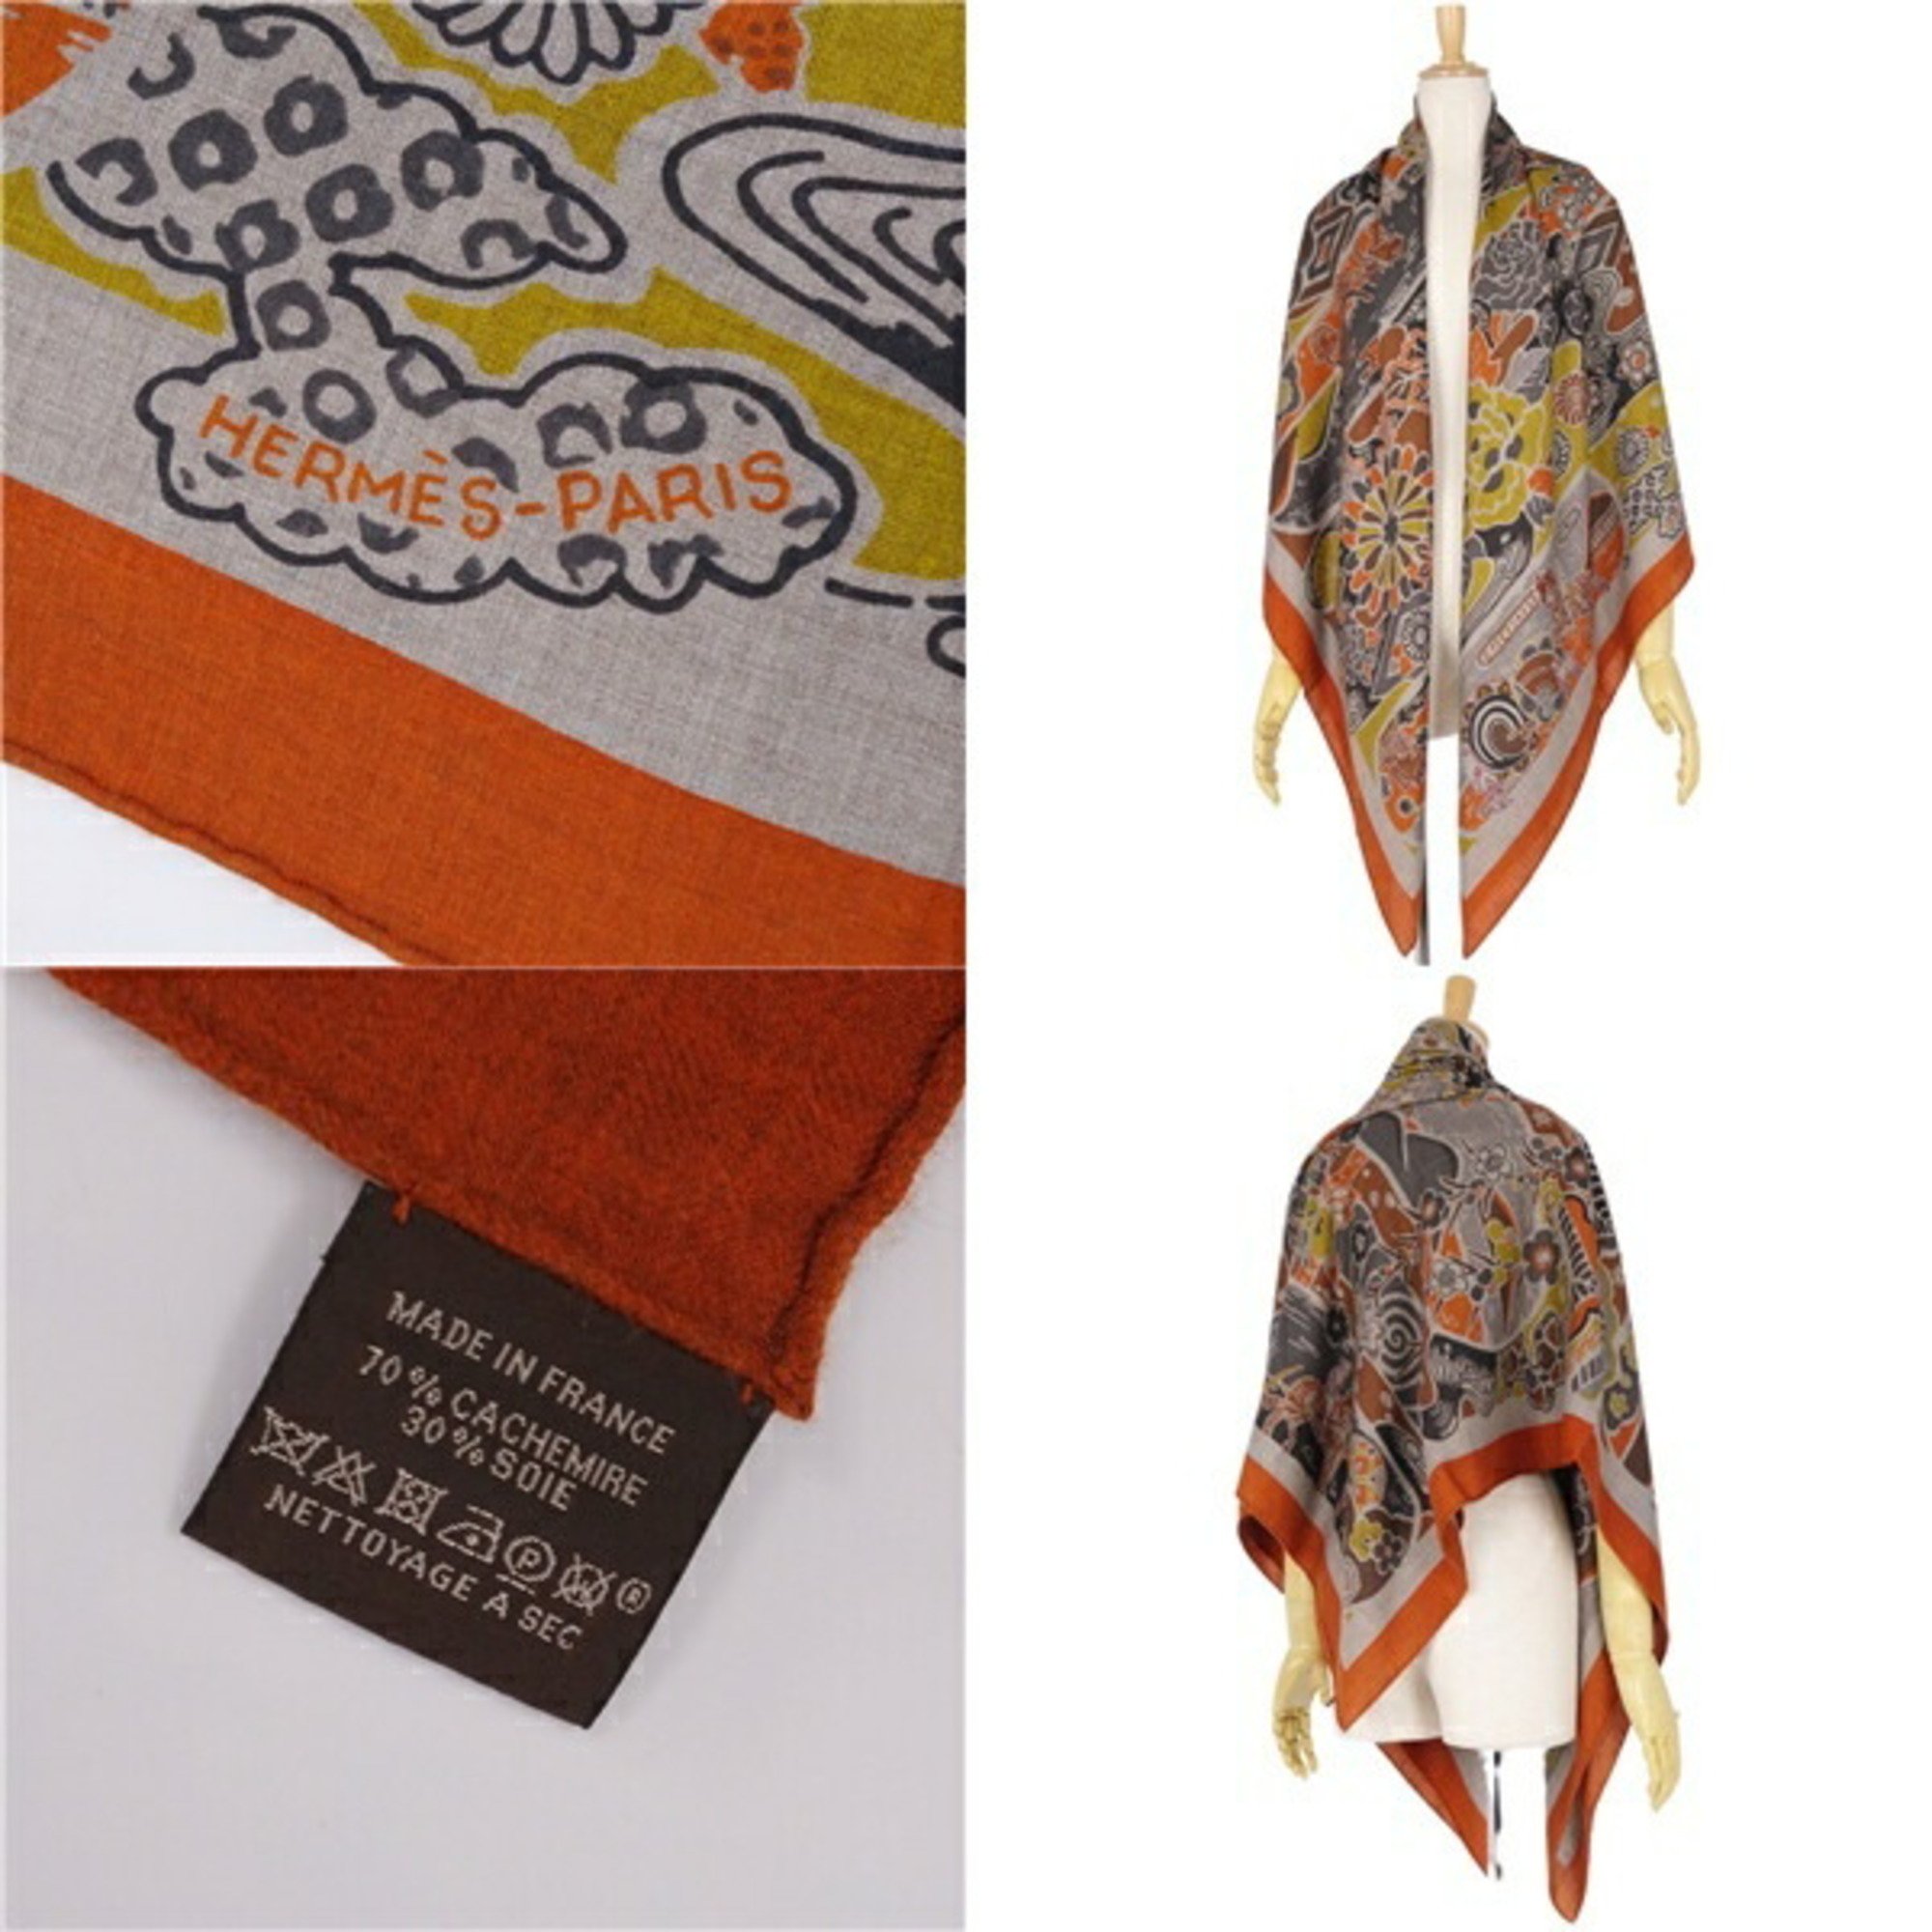 HERMES Scarf Muffler Carre140 BINGATA Bingata Ryukyu Okinawa Stole Shawl Cashmere Silk Ladies Multicolor